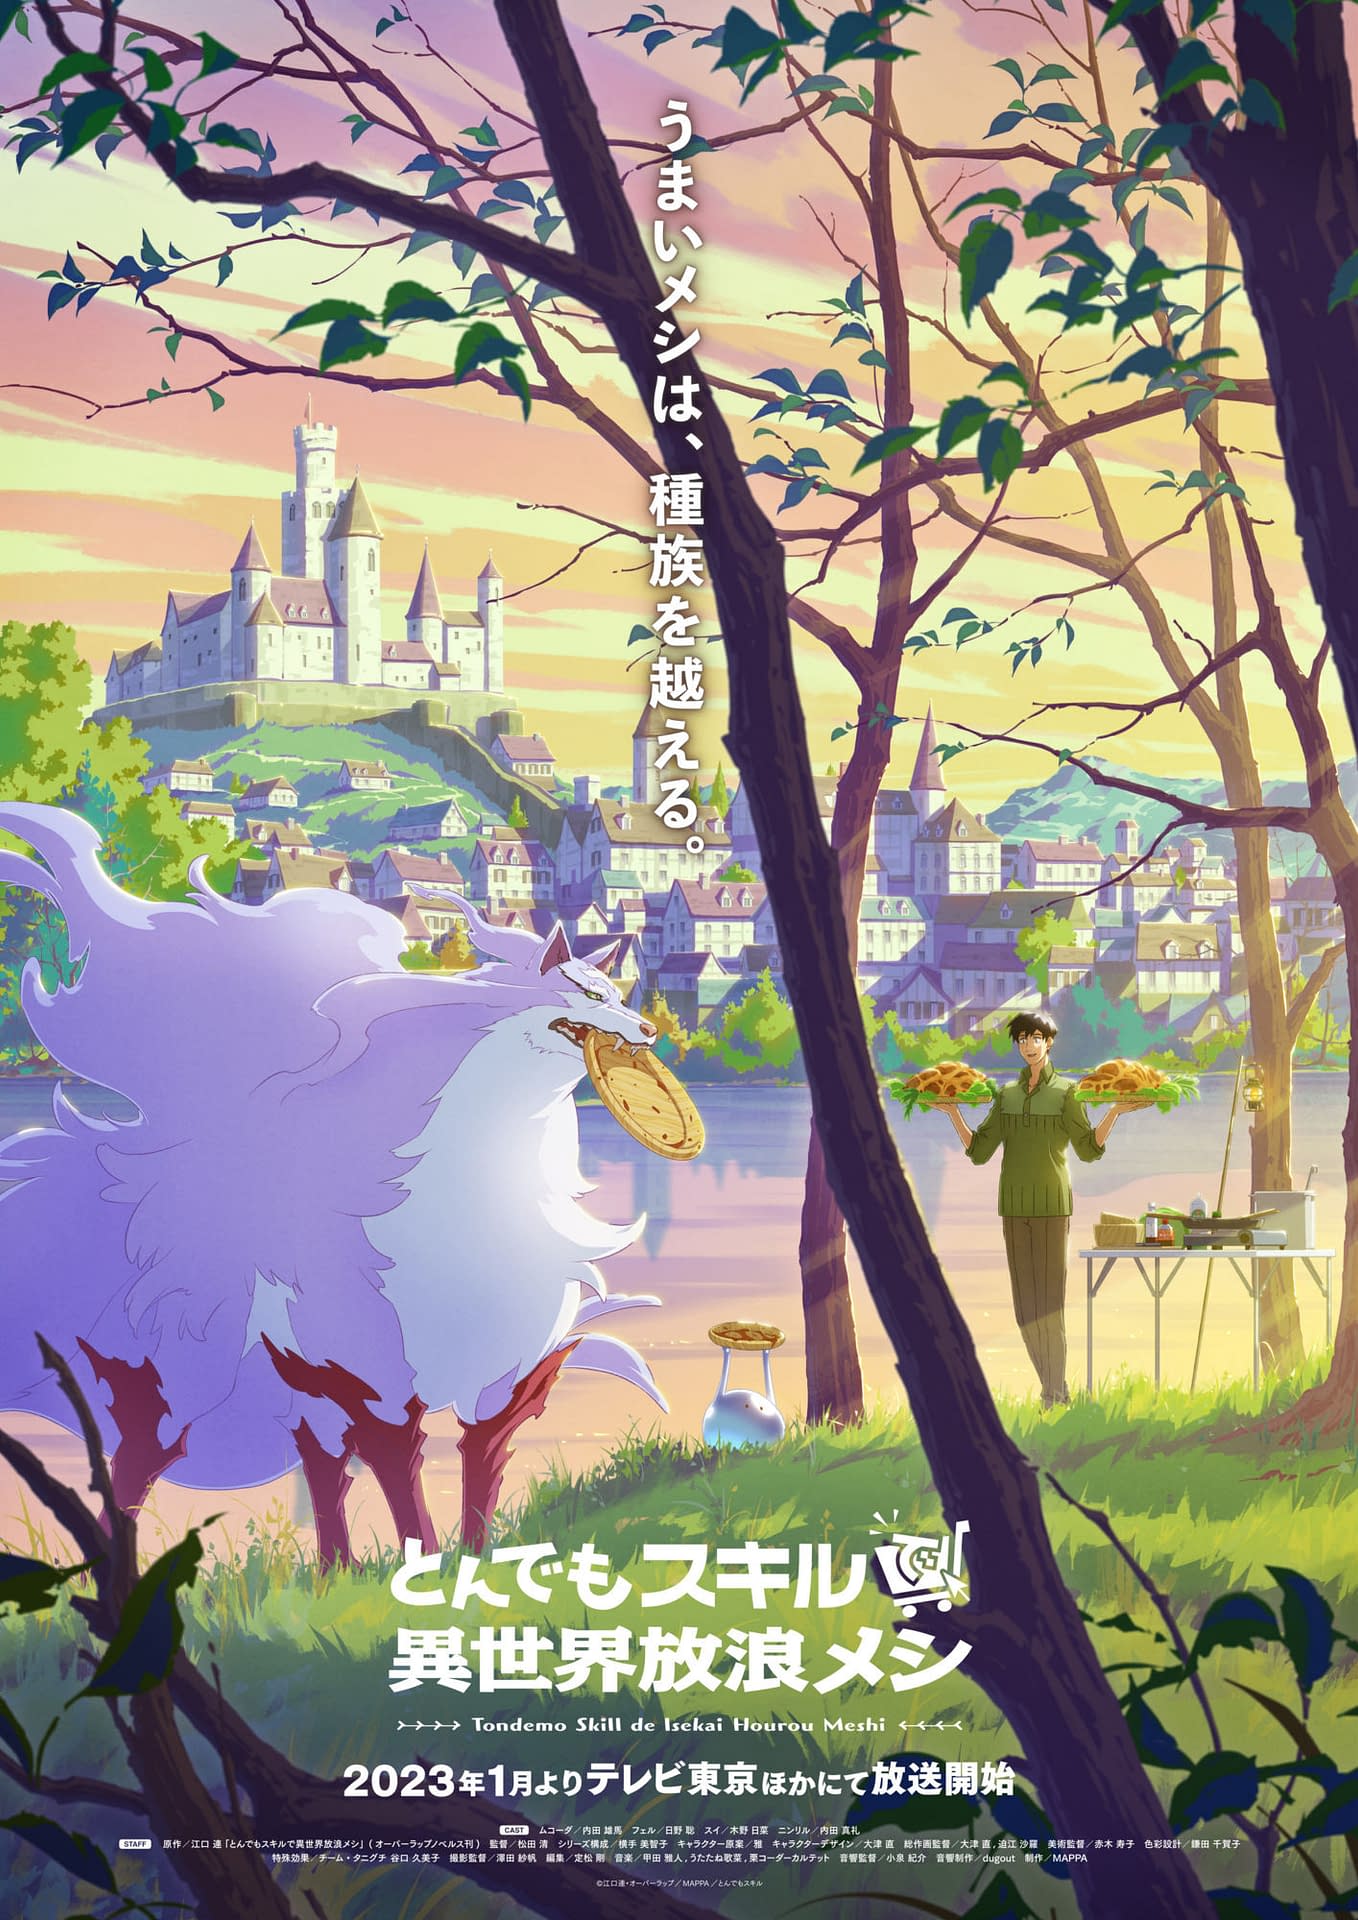 Crunchyroll Journeys to Anime Frontier with 'Revenger' Premiere, Panels